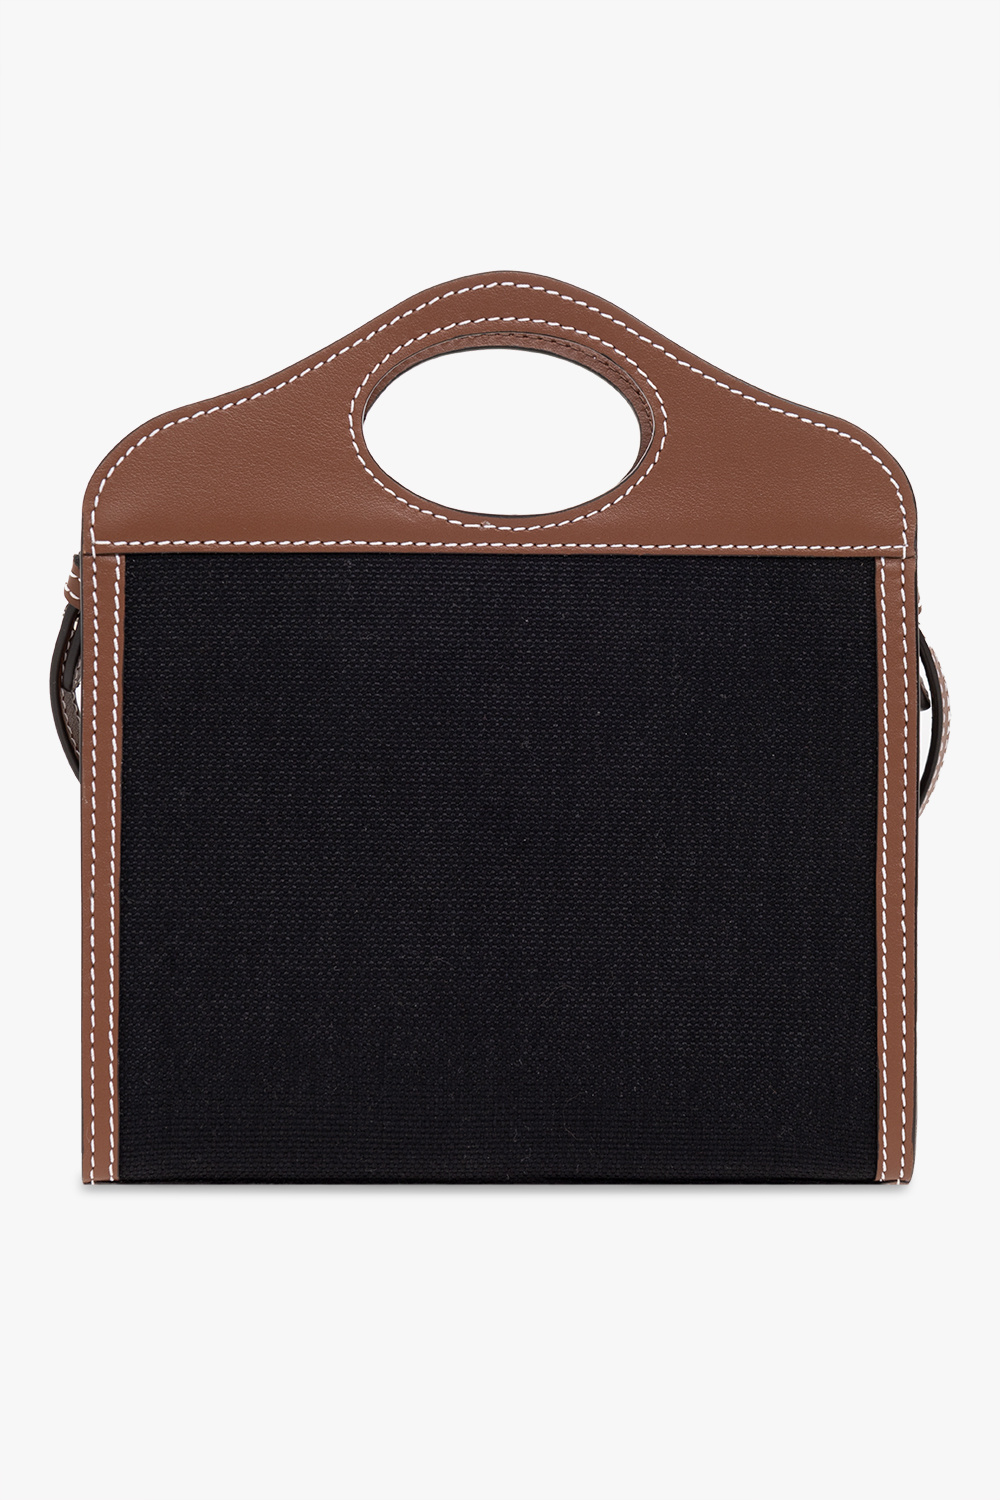 burberry Polo ‘Pocket Micro’ shoulder bag